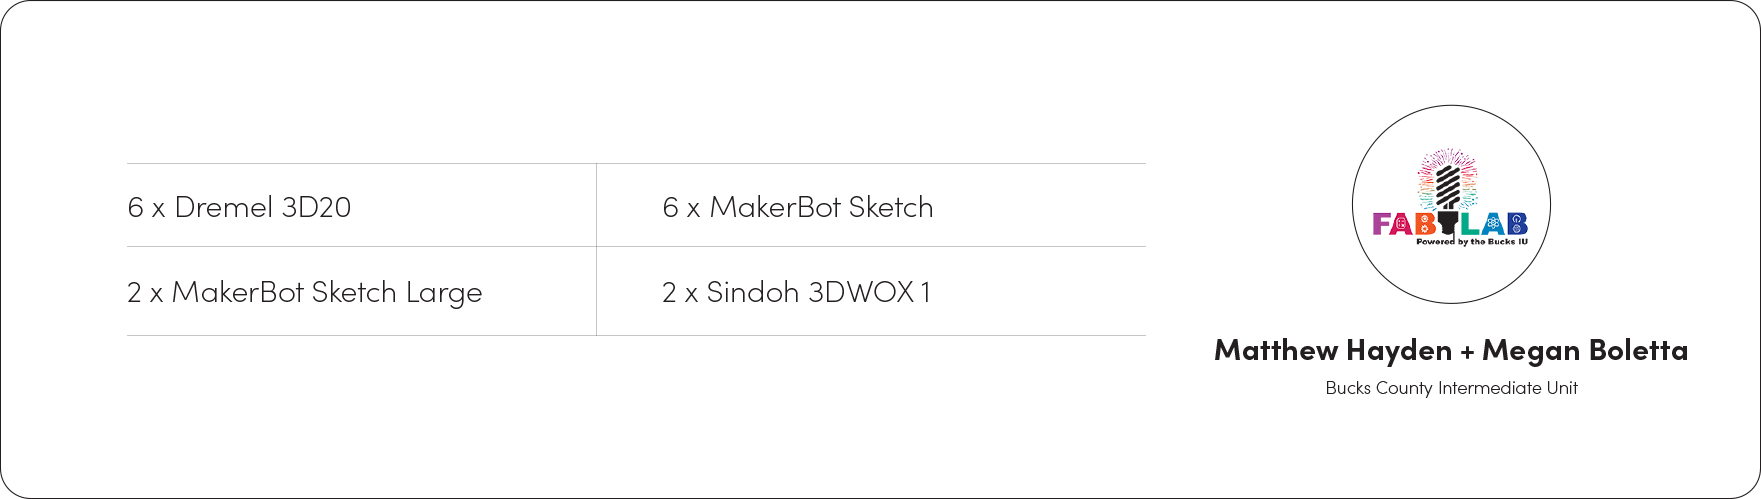 Fab Lab logo with the following list - 6 x Dremel 3D20, 6 x MakerBot Sketch, 2 x MakerBot Sketch Large, 2 x Sindoh 3DWOX 1.